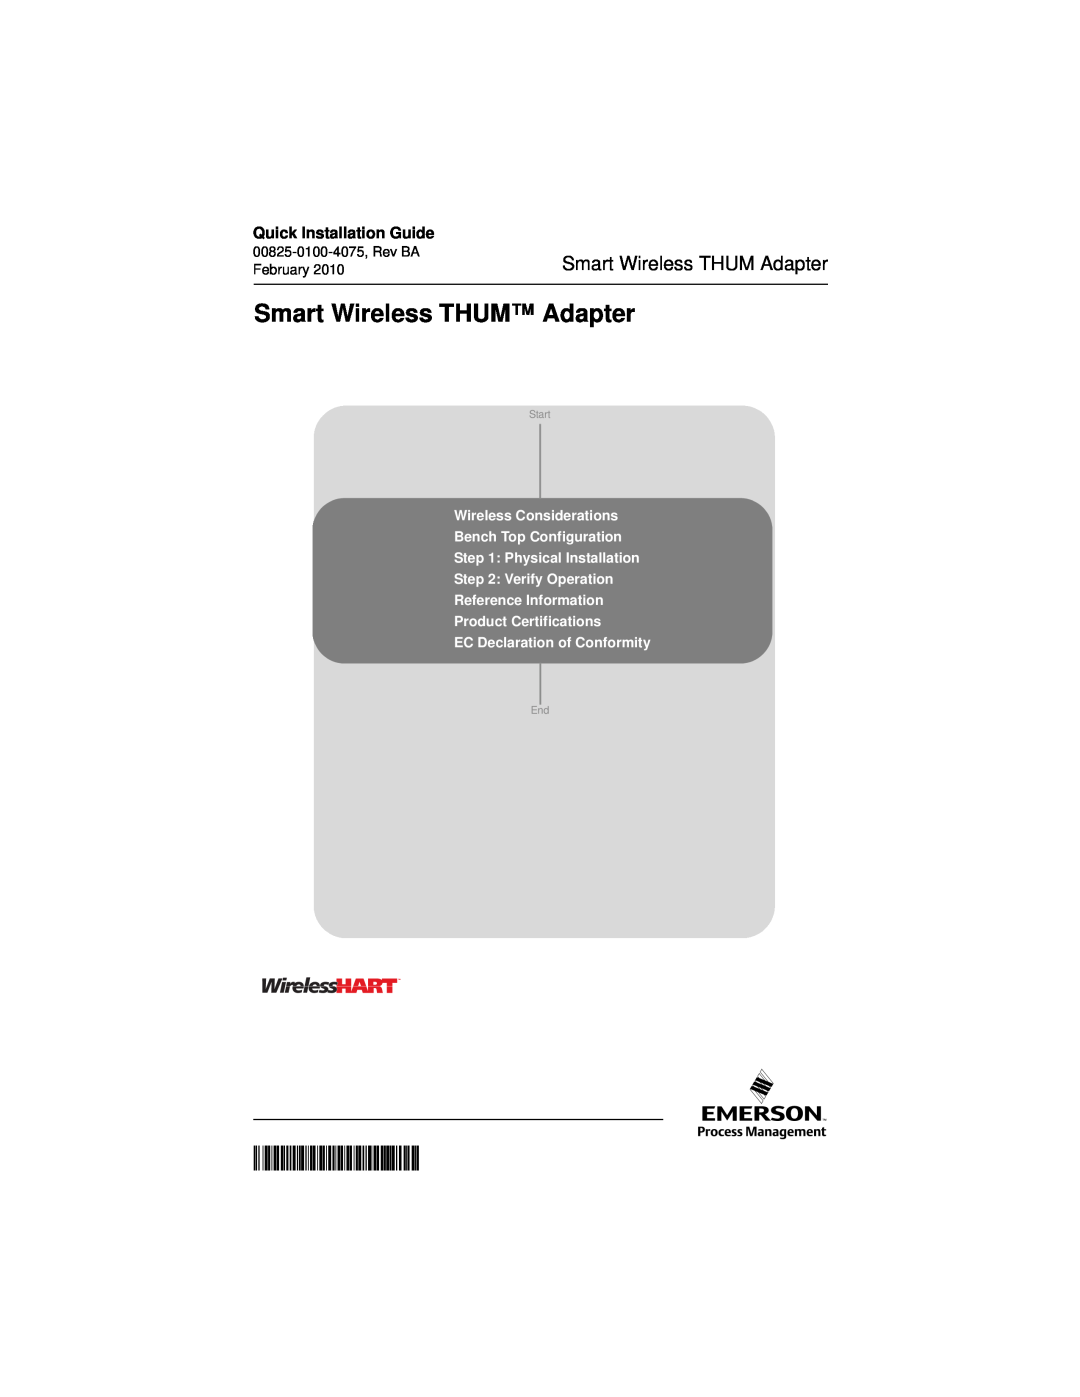 Emerson 00825-0100-4075 manual Smart Wireless THUM Adapter, Quick Installation Guide, EC Declaration of Conformity, Start 